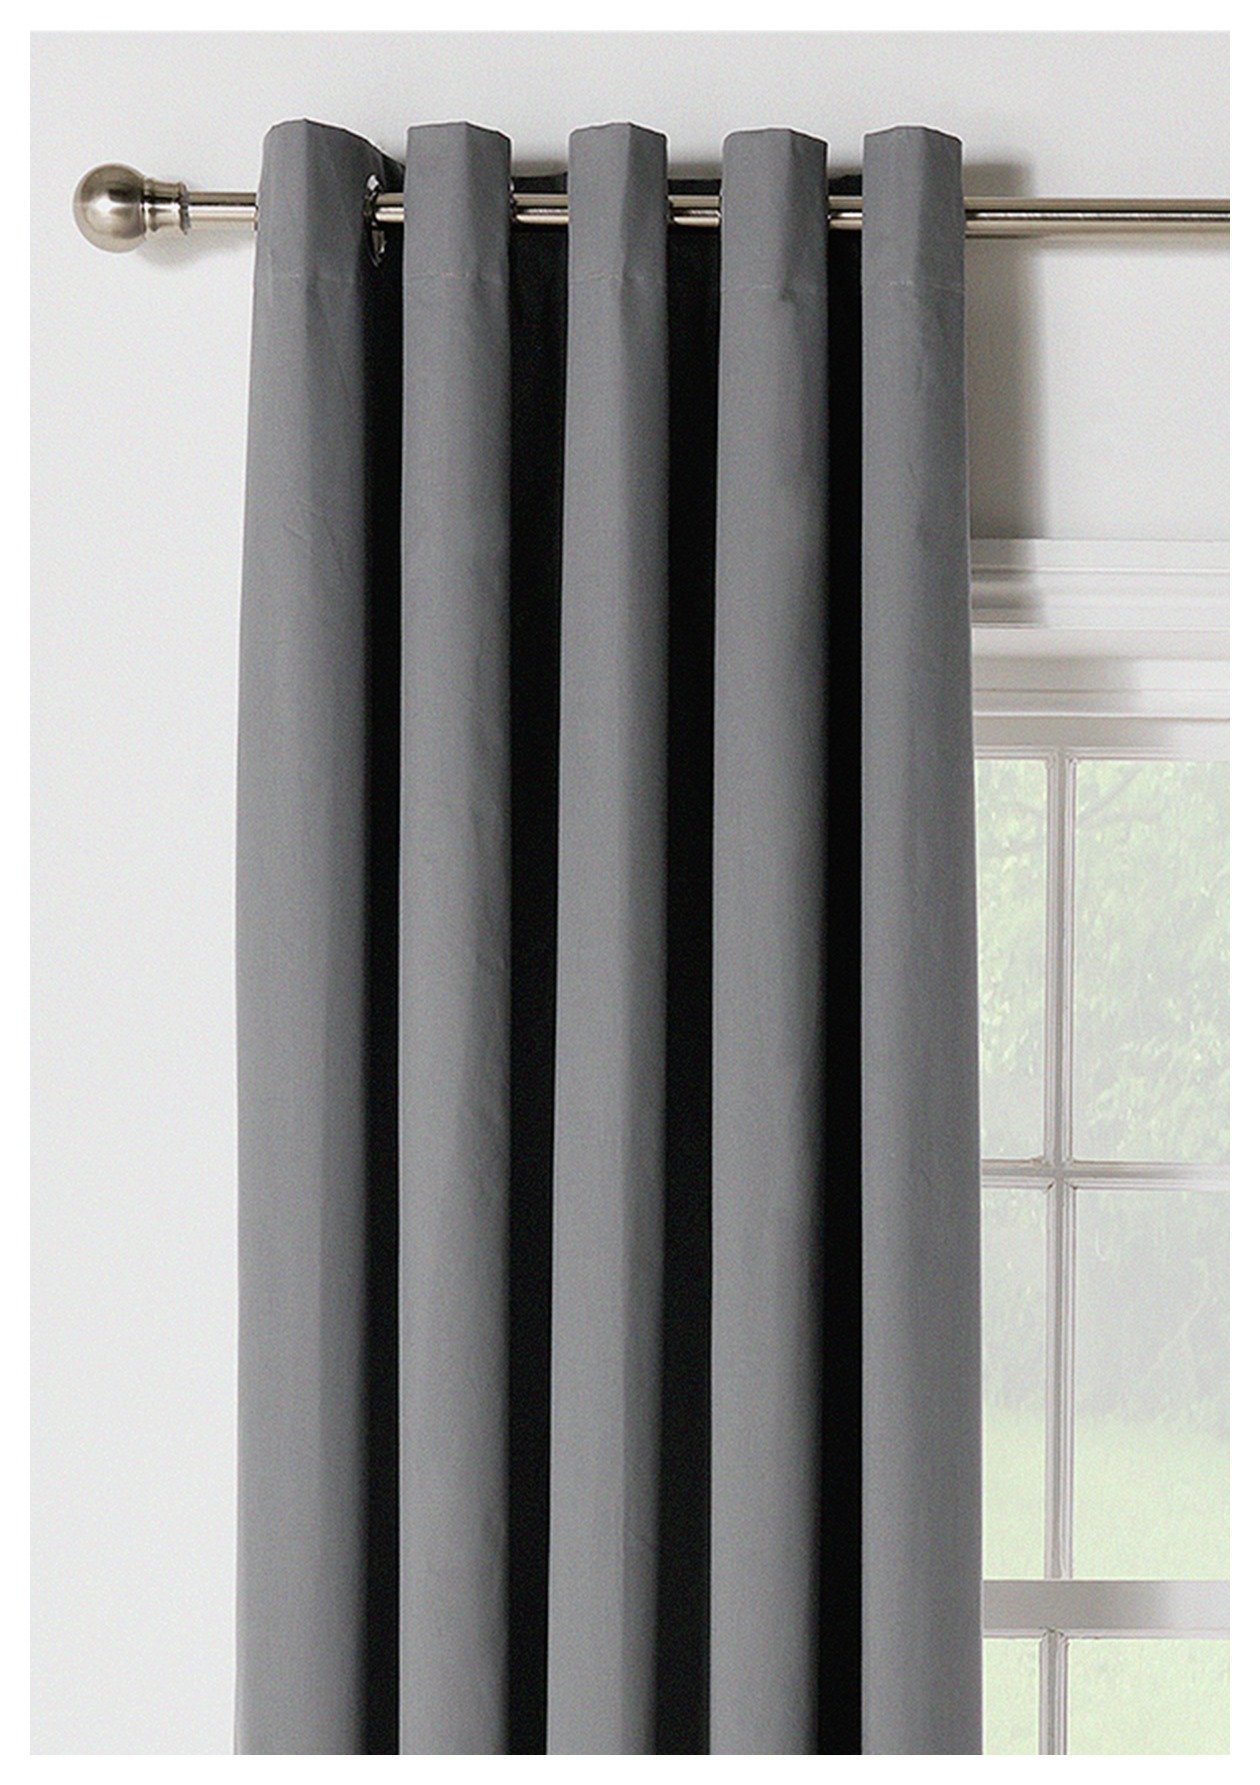 ColourMatch Blackout Curtains - 168x229cm - Flint Grey